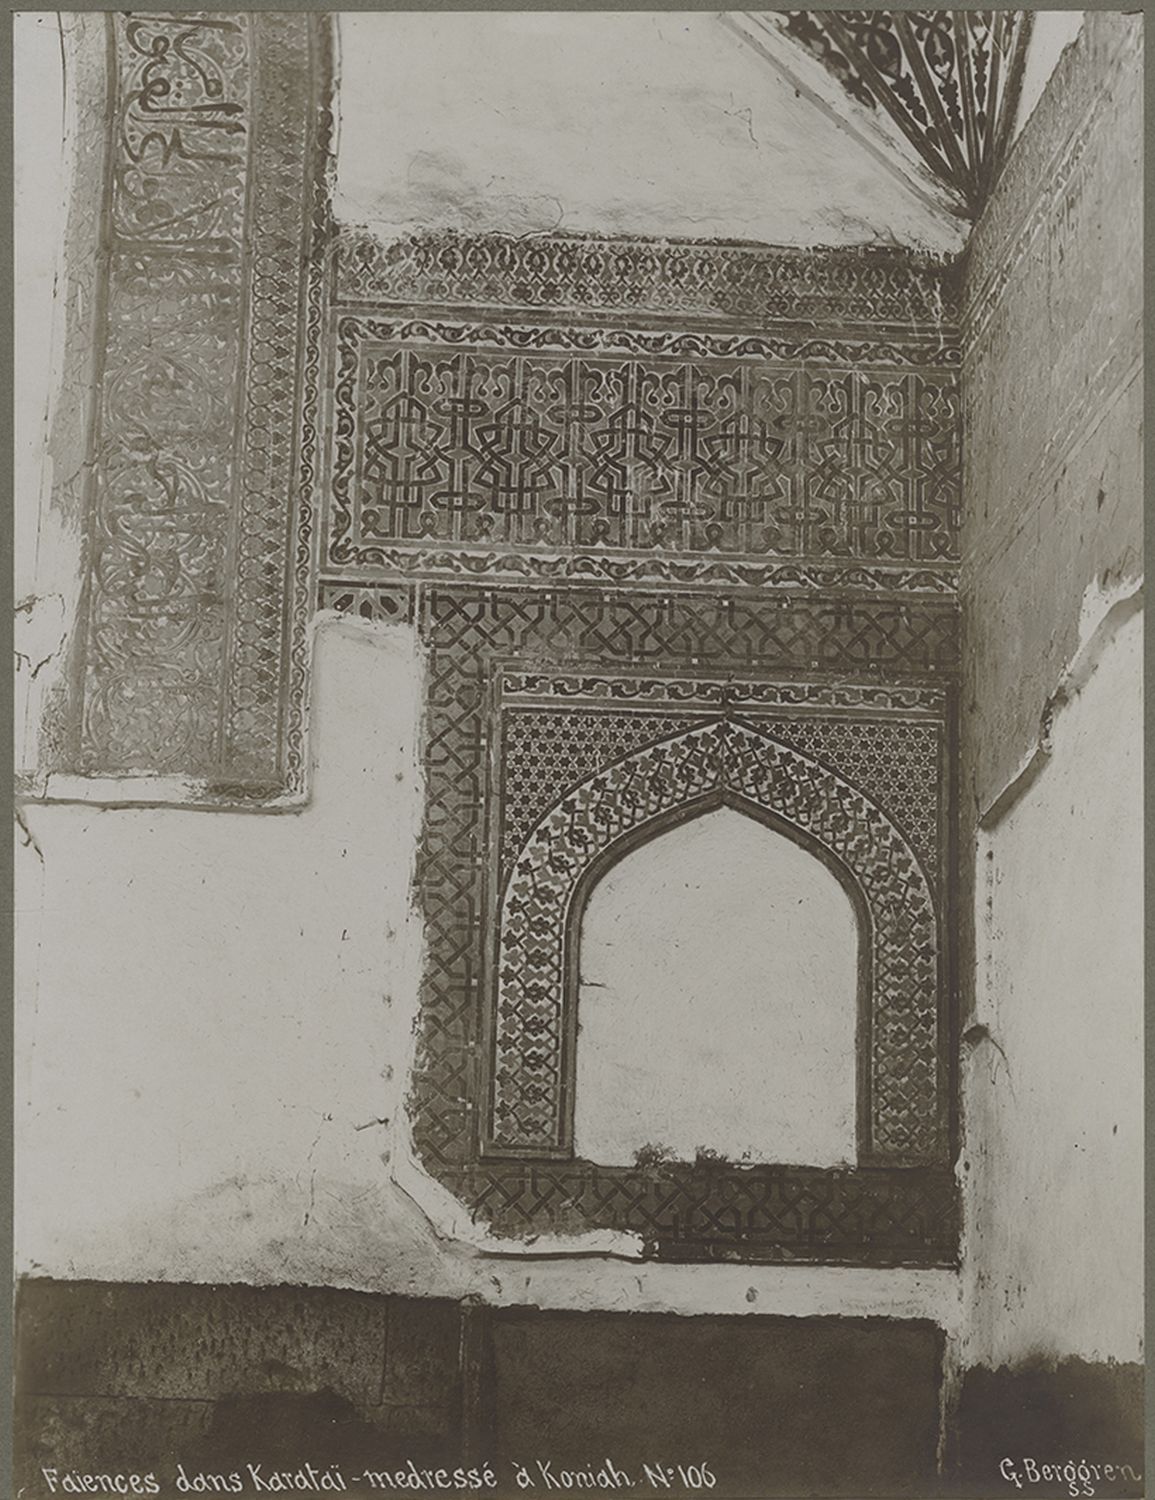 Büyük Karatay Medresesi - View of tilework and inscriptions on interior.